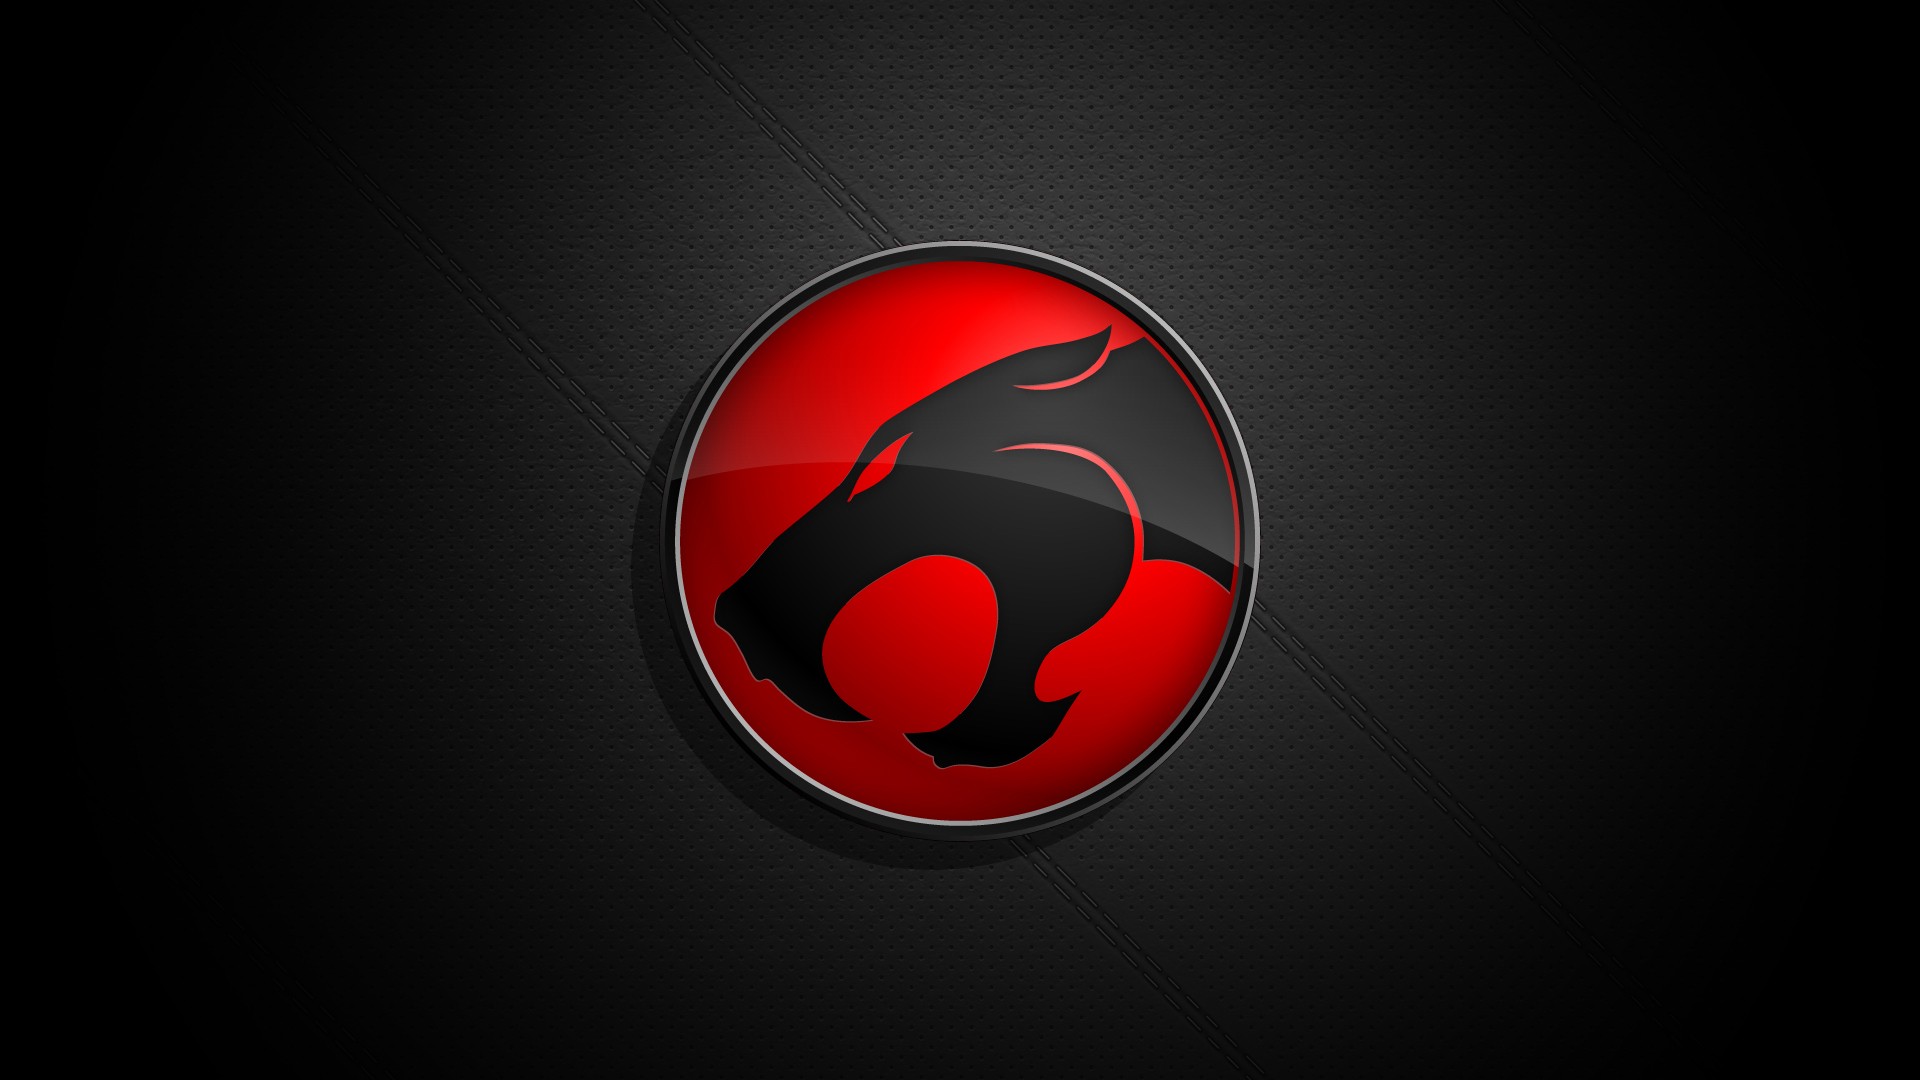 Thundercats logo images danaspef.top